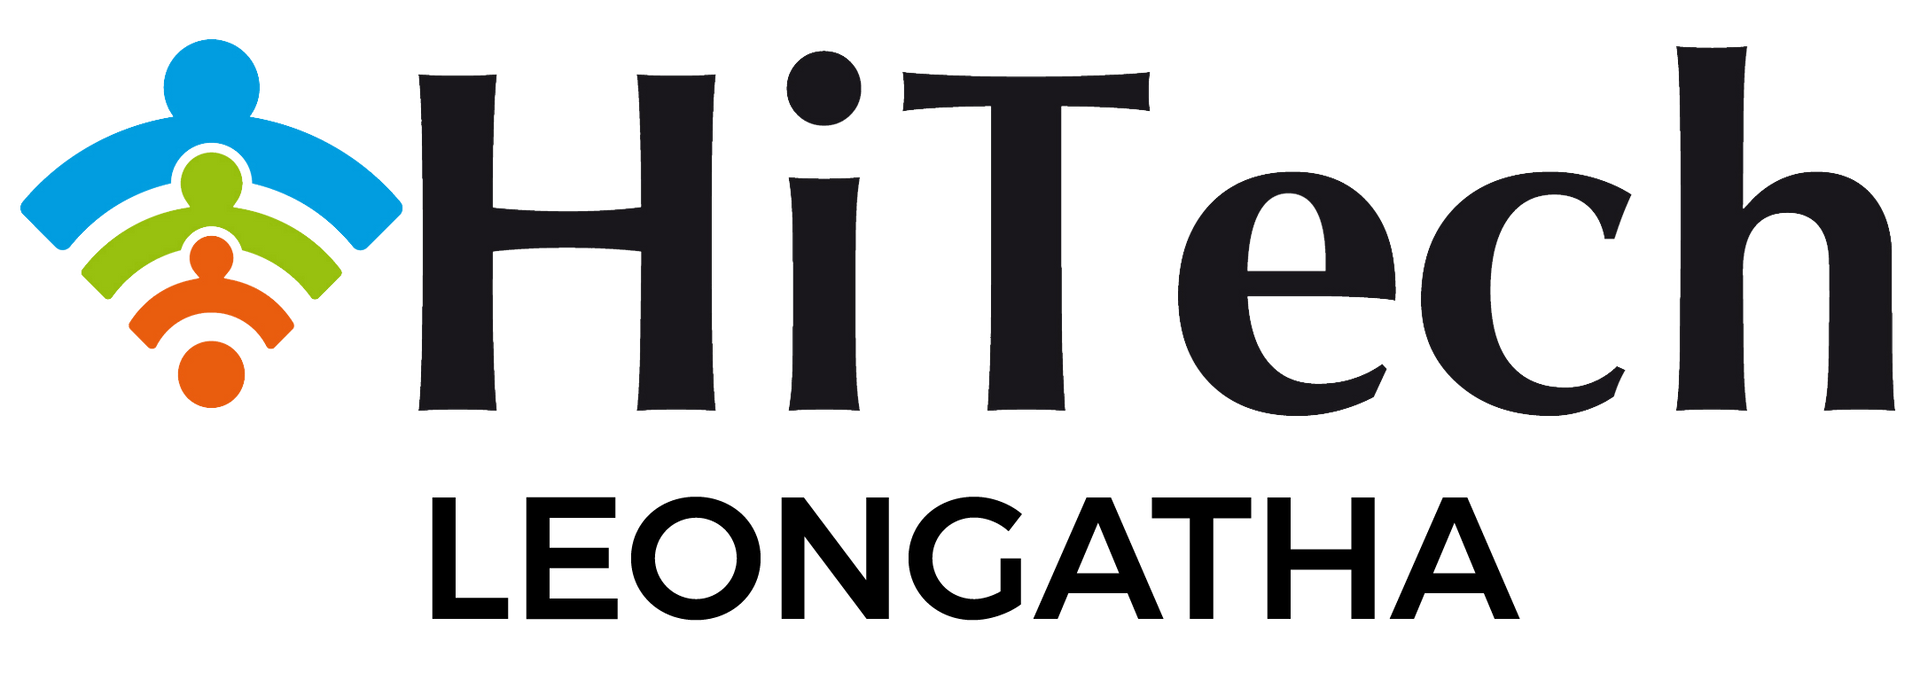 Hitech-Connections-Leongatha-logo